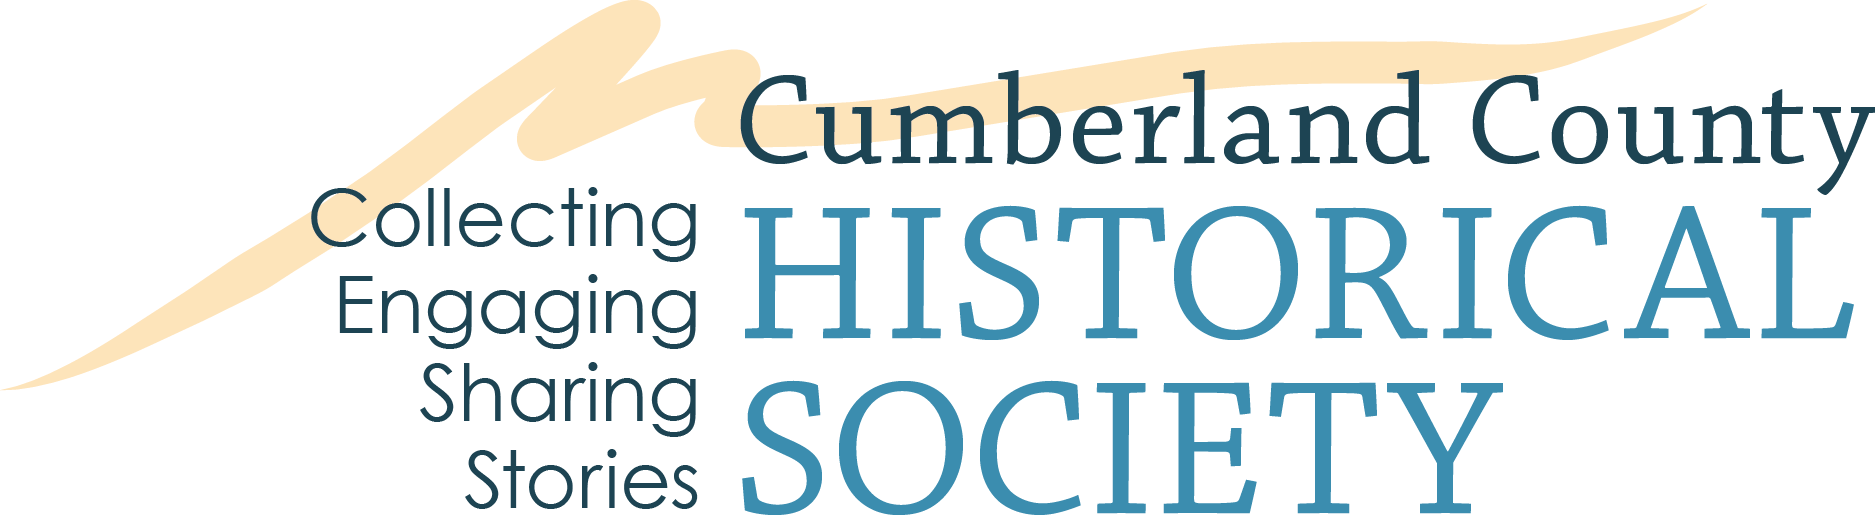 Cumberland County Historical Society